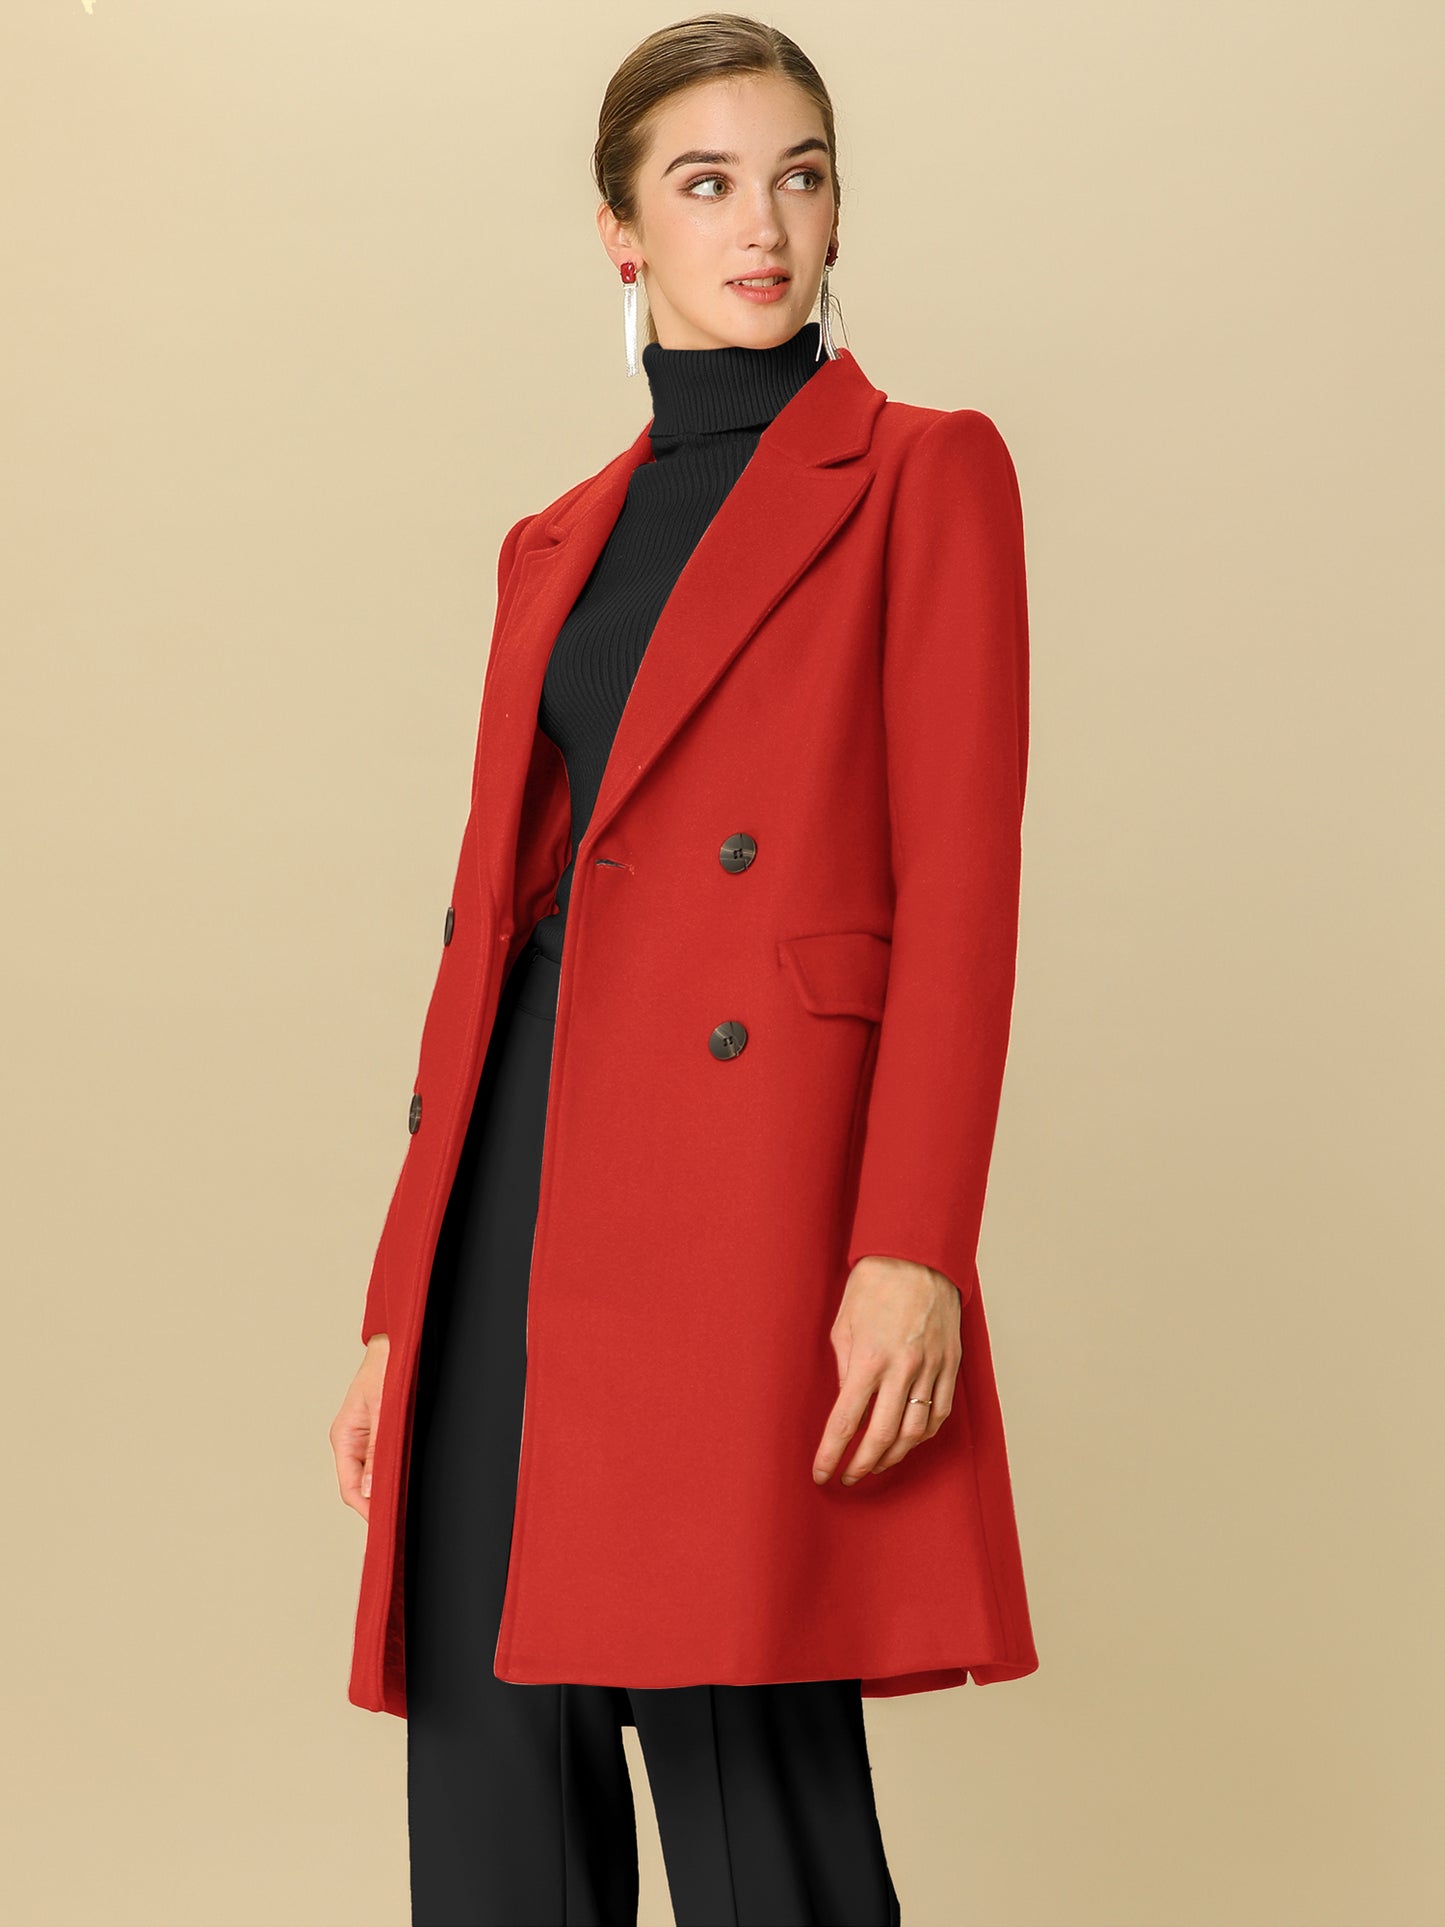 Allegra K Notch Lapel Double Breasted Belted Mid Long Outwear Winter Coat Red